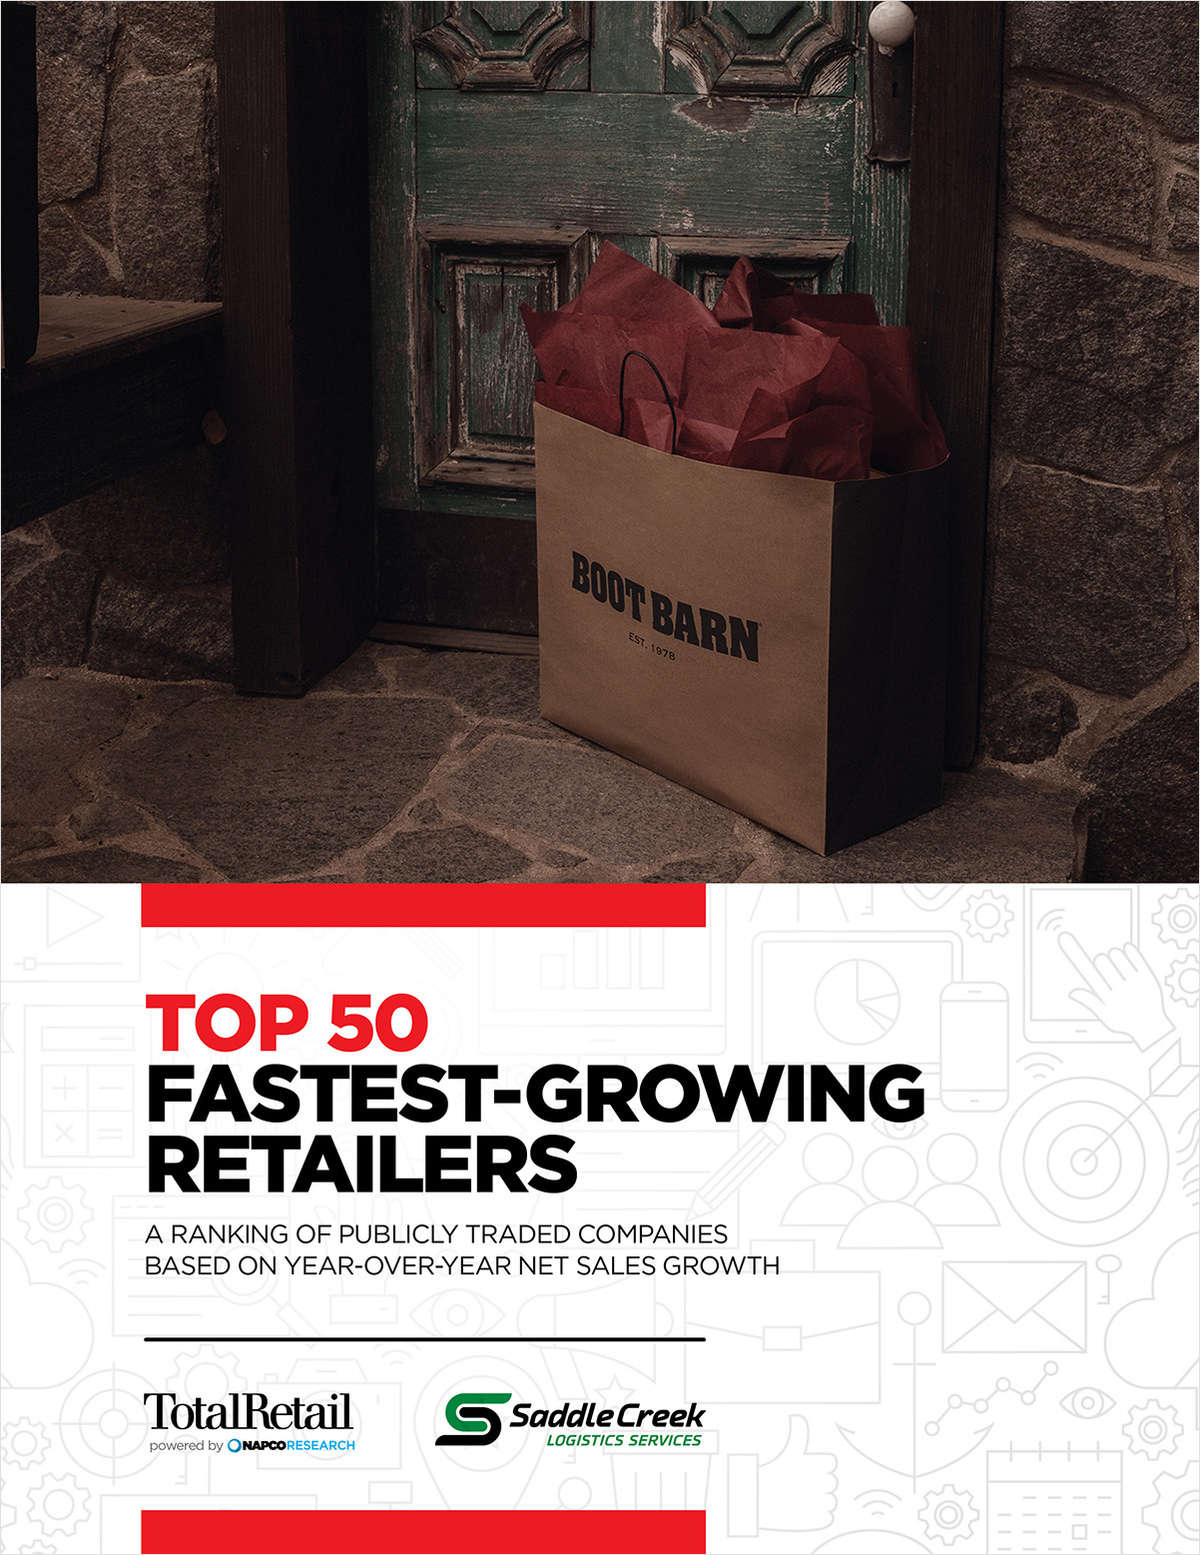 Top 50 Fastest-Growing Retailers